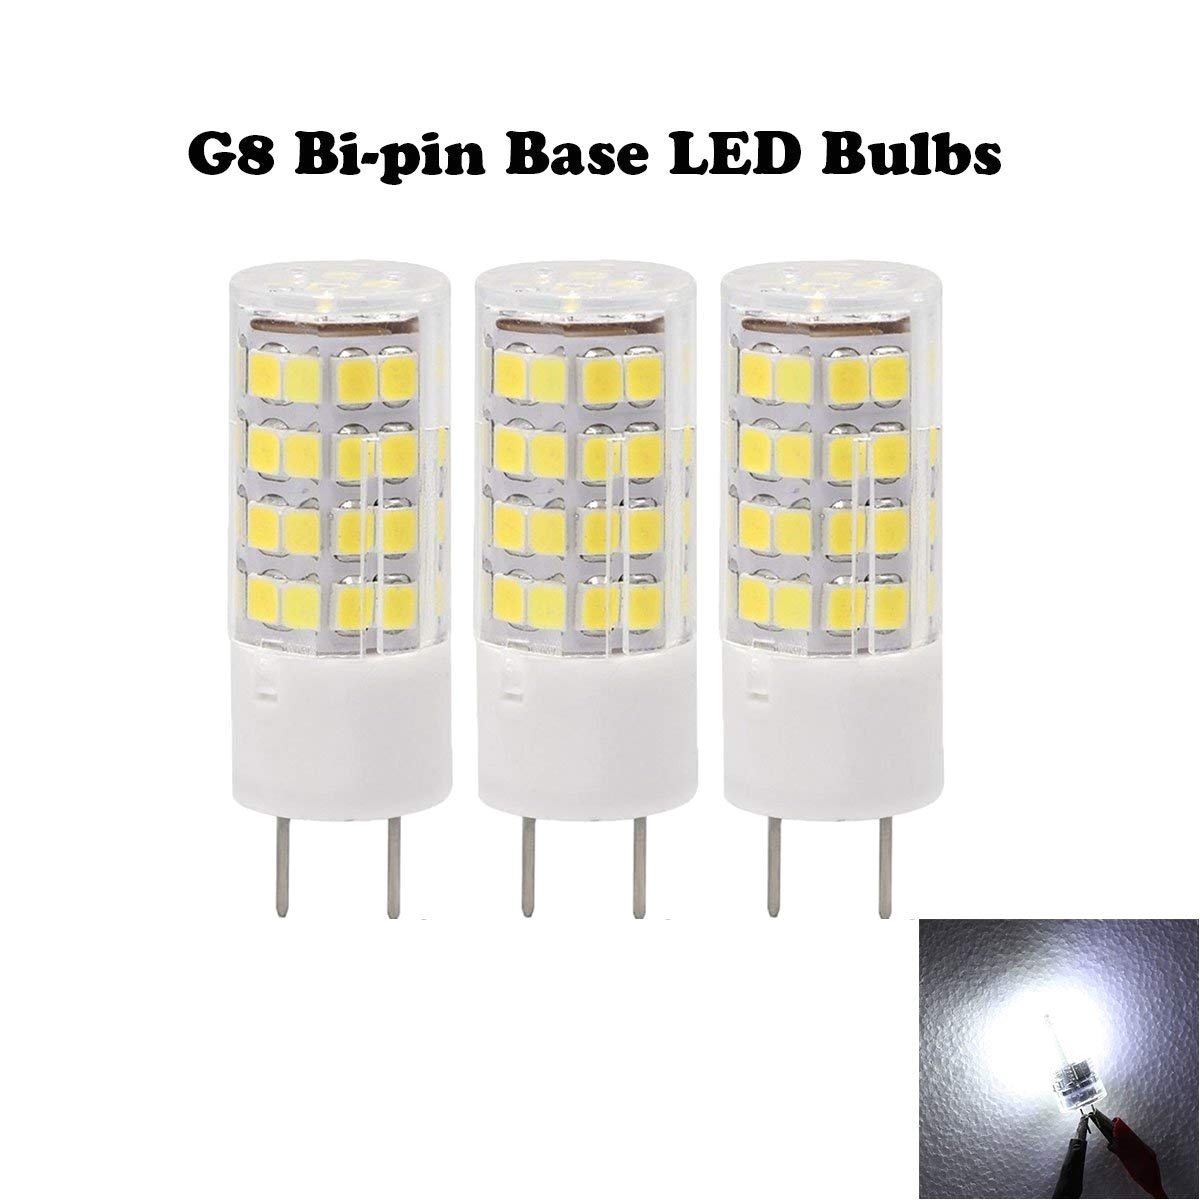 ashialight g8 led bulb 120 volt 35 watt g8 bulb g8 bi pin base daylight 5500k t4 jcd type g8 led replacement bulb pack of 3 amazon com